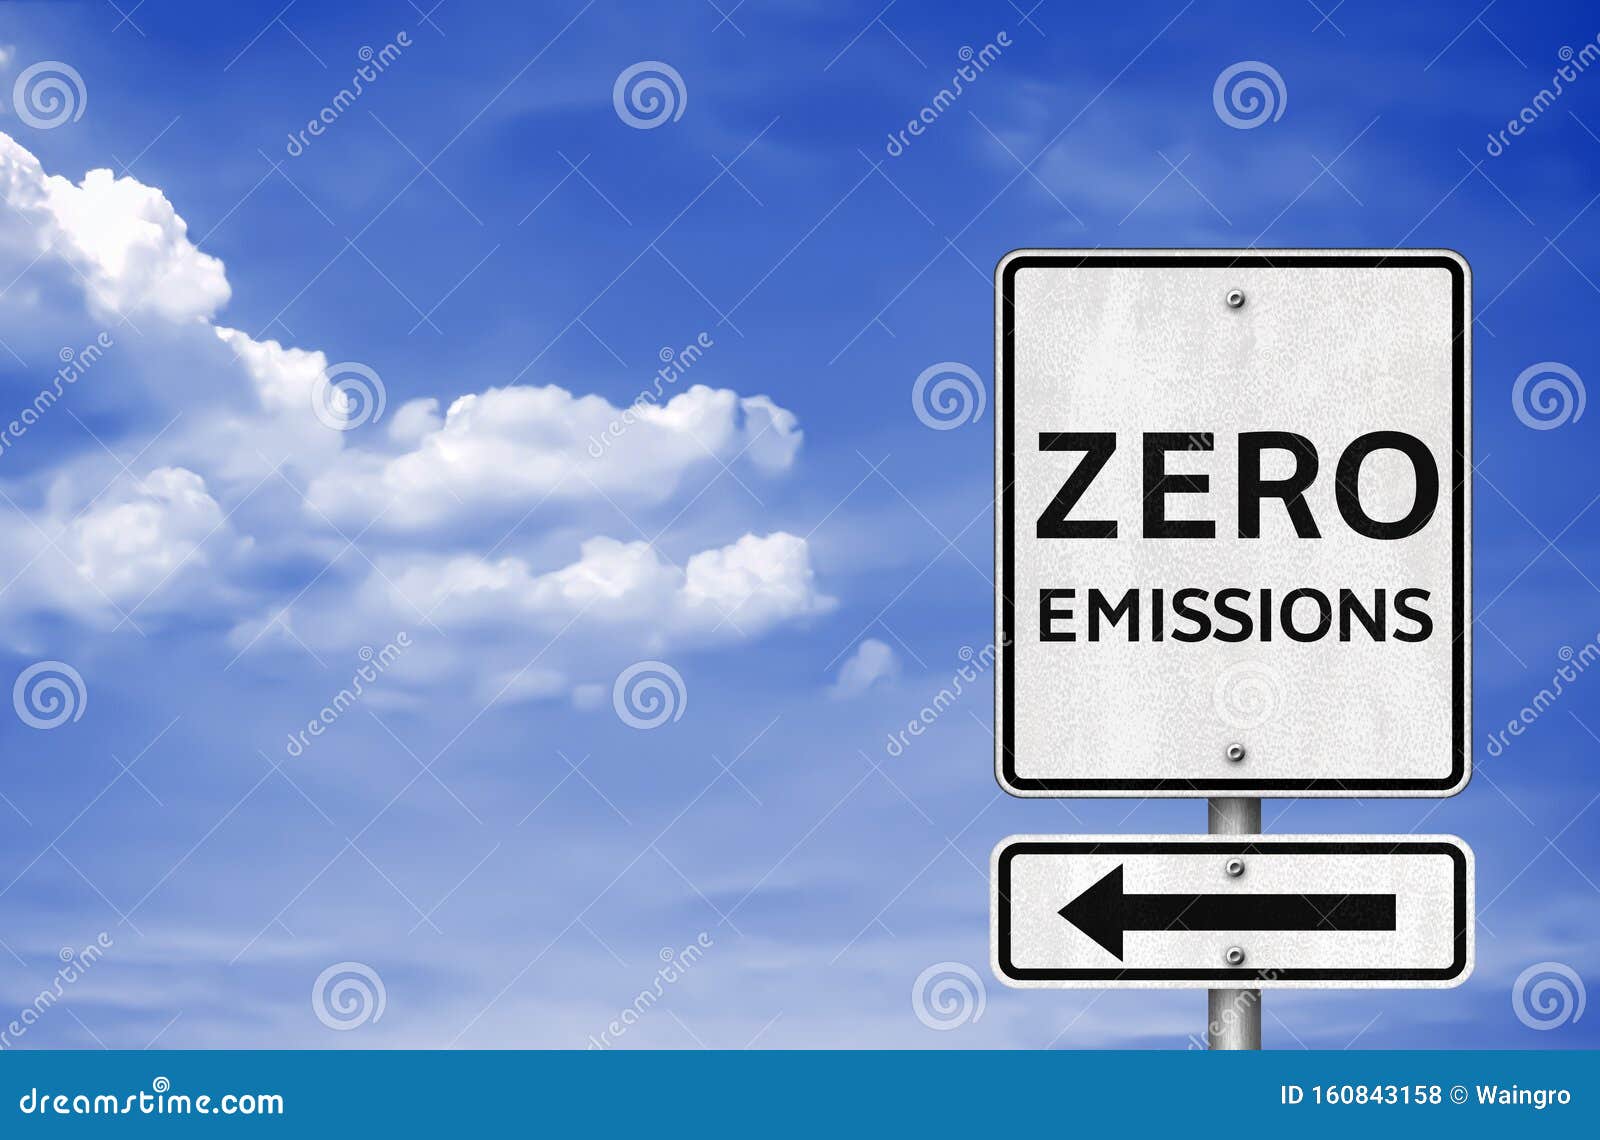 zero emissions - road sign information